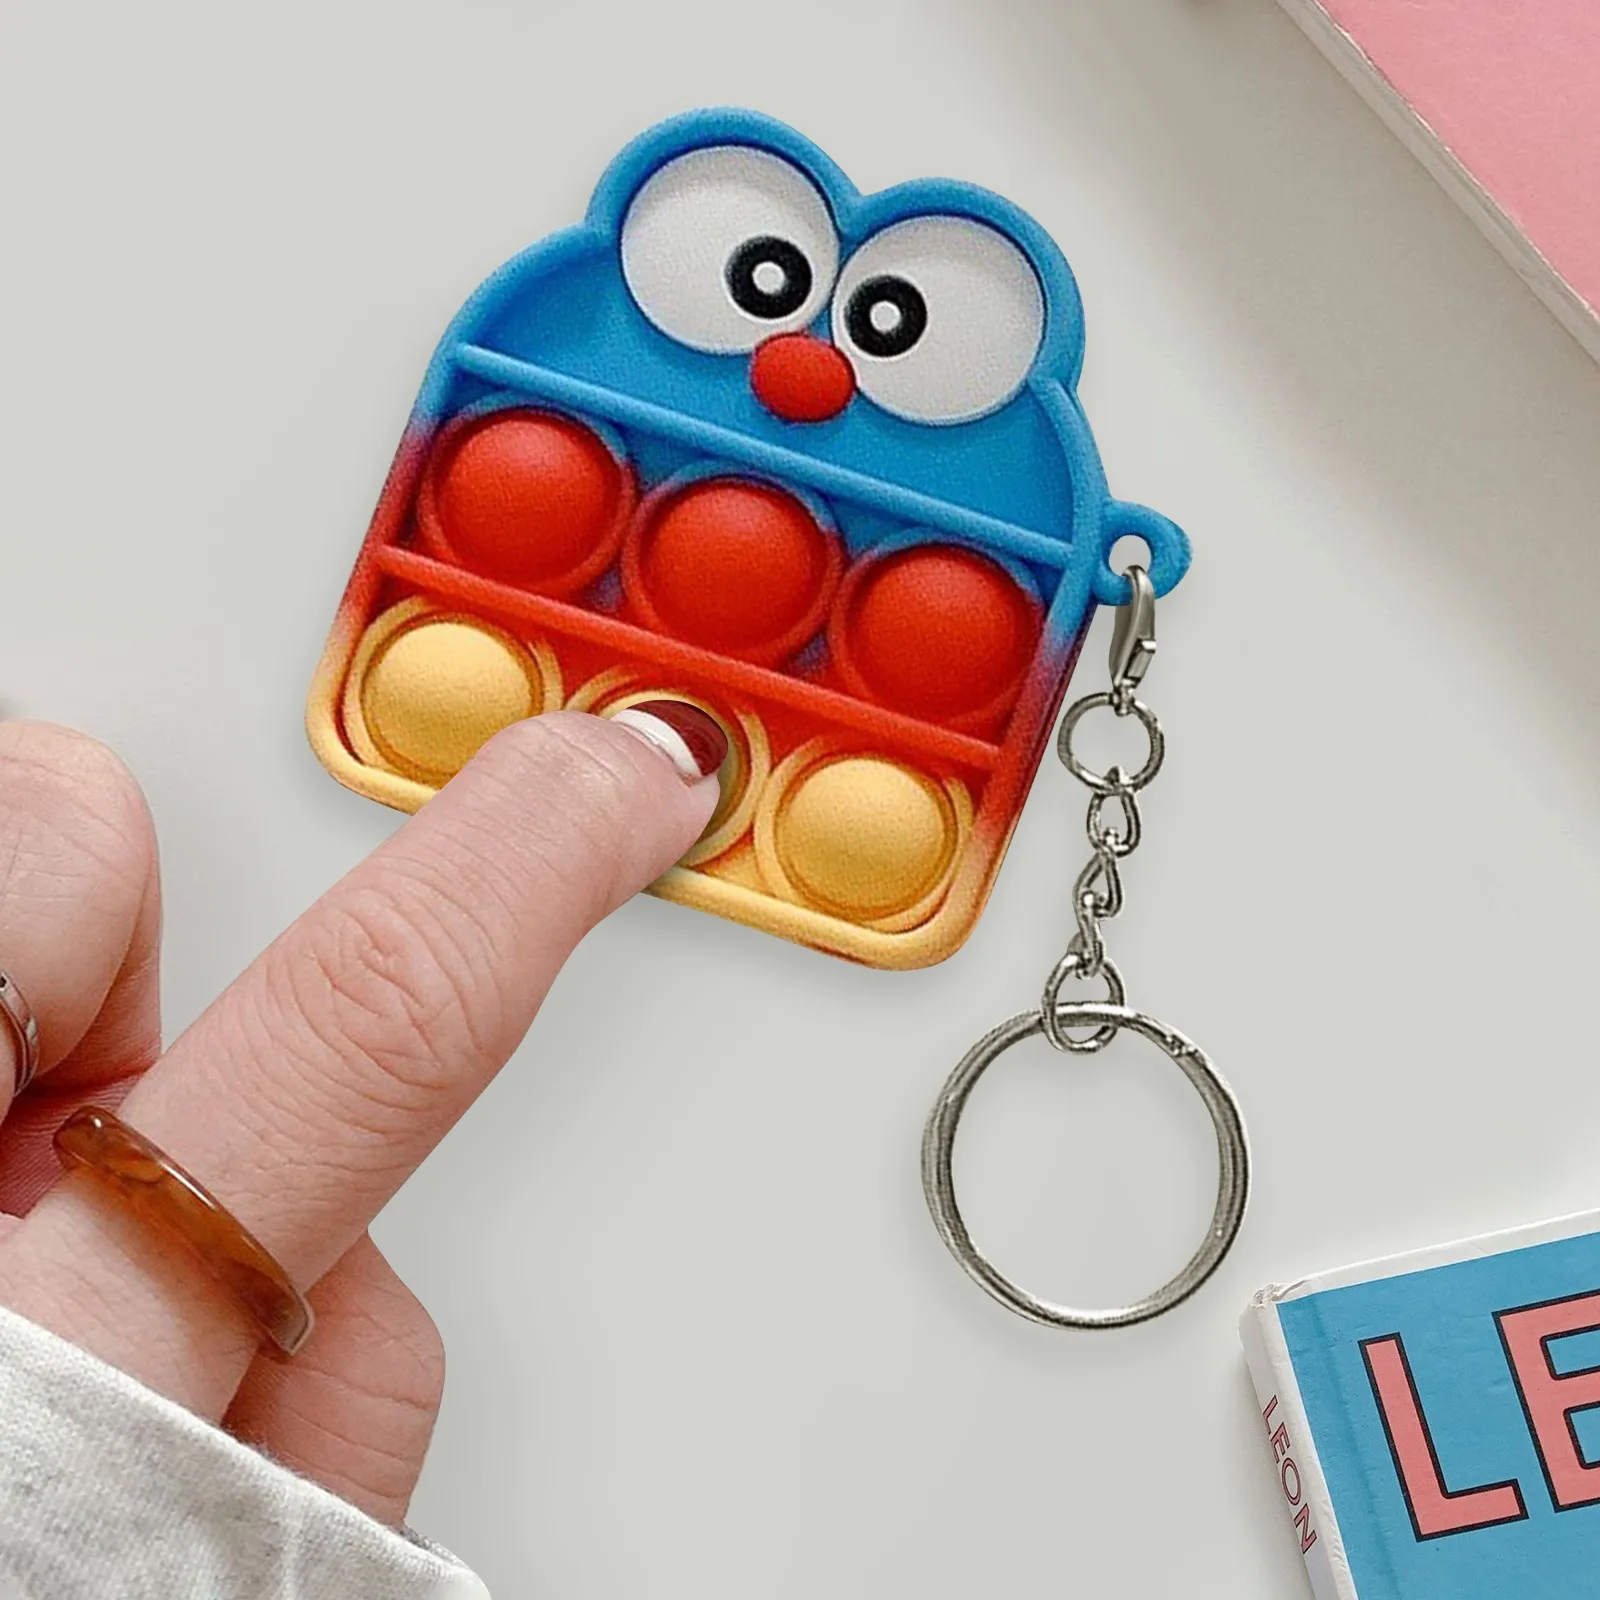 fidget squishy balls Anti Stress Mini Pops Simple Dimple Keychain Its Push Bubble Anxiety Sensory Fidget Toy Relief for Autism Adhd Children Adults fidget snapper